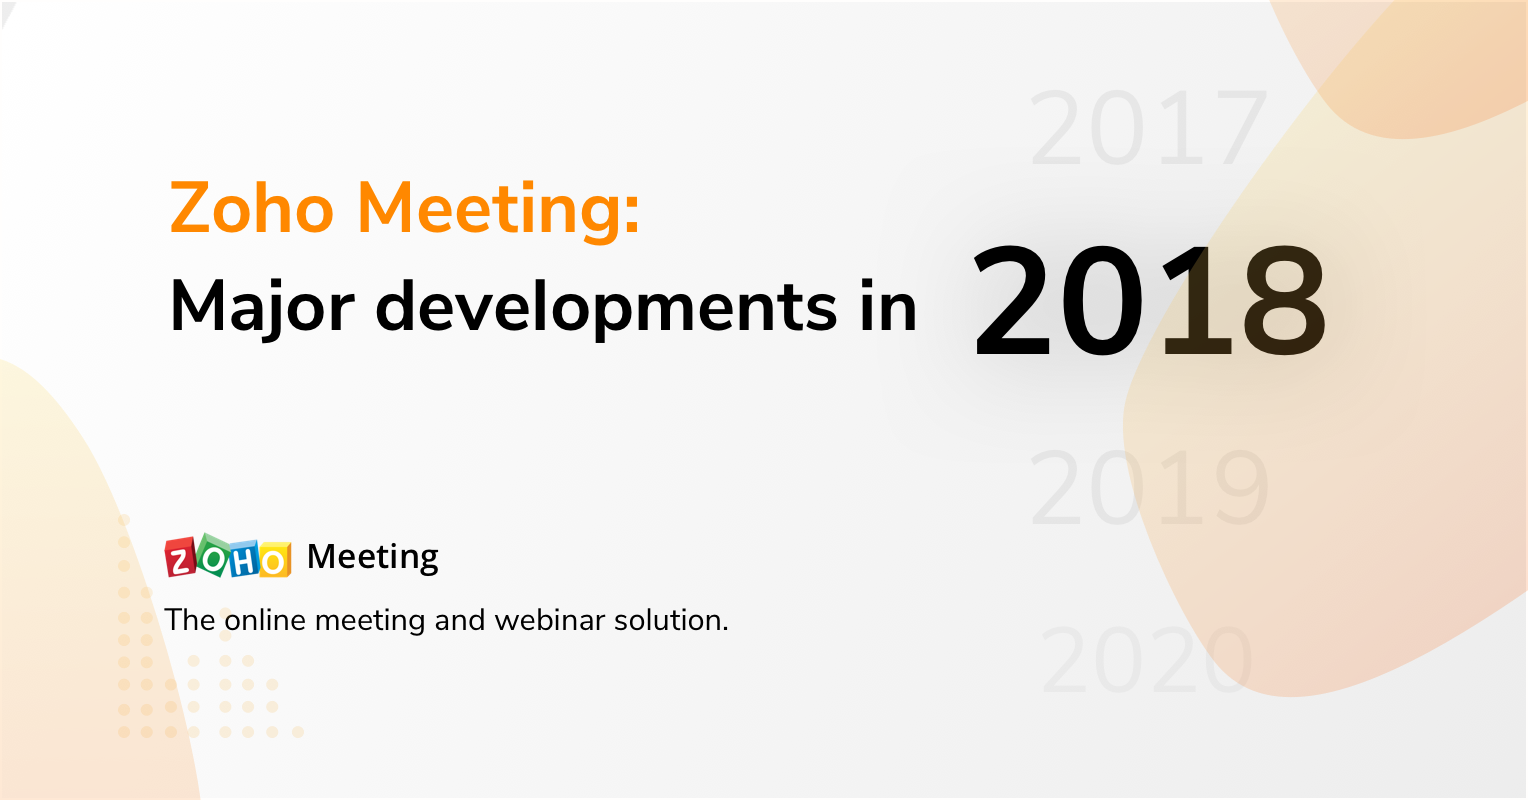 Zoho Meeting: Evolution through 2018